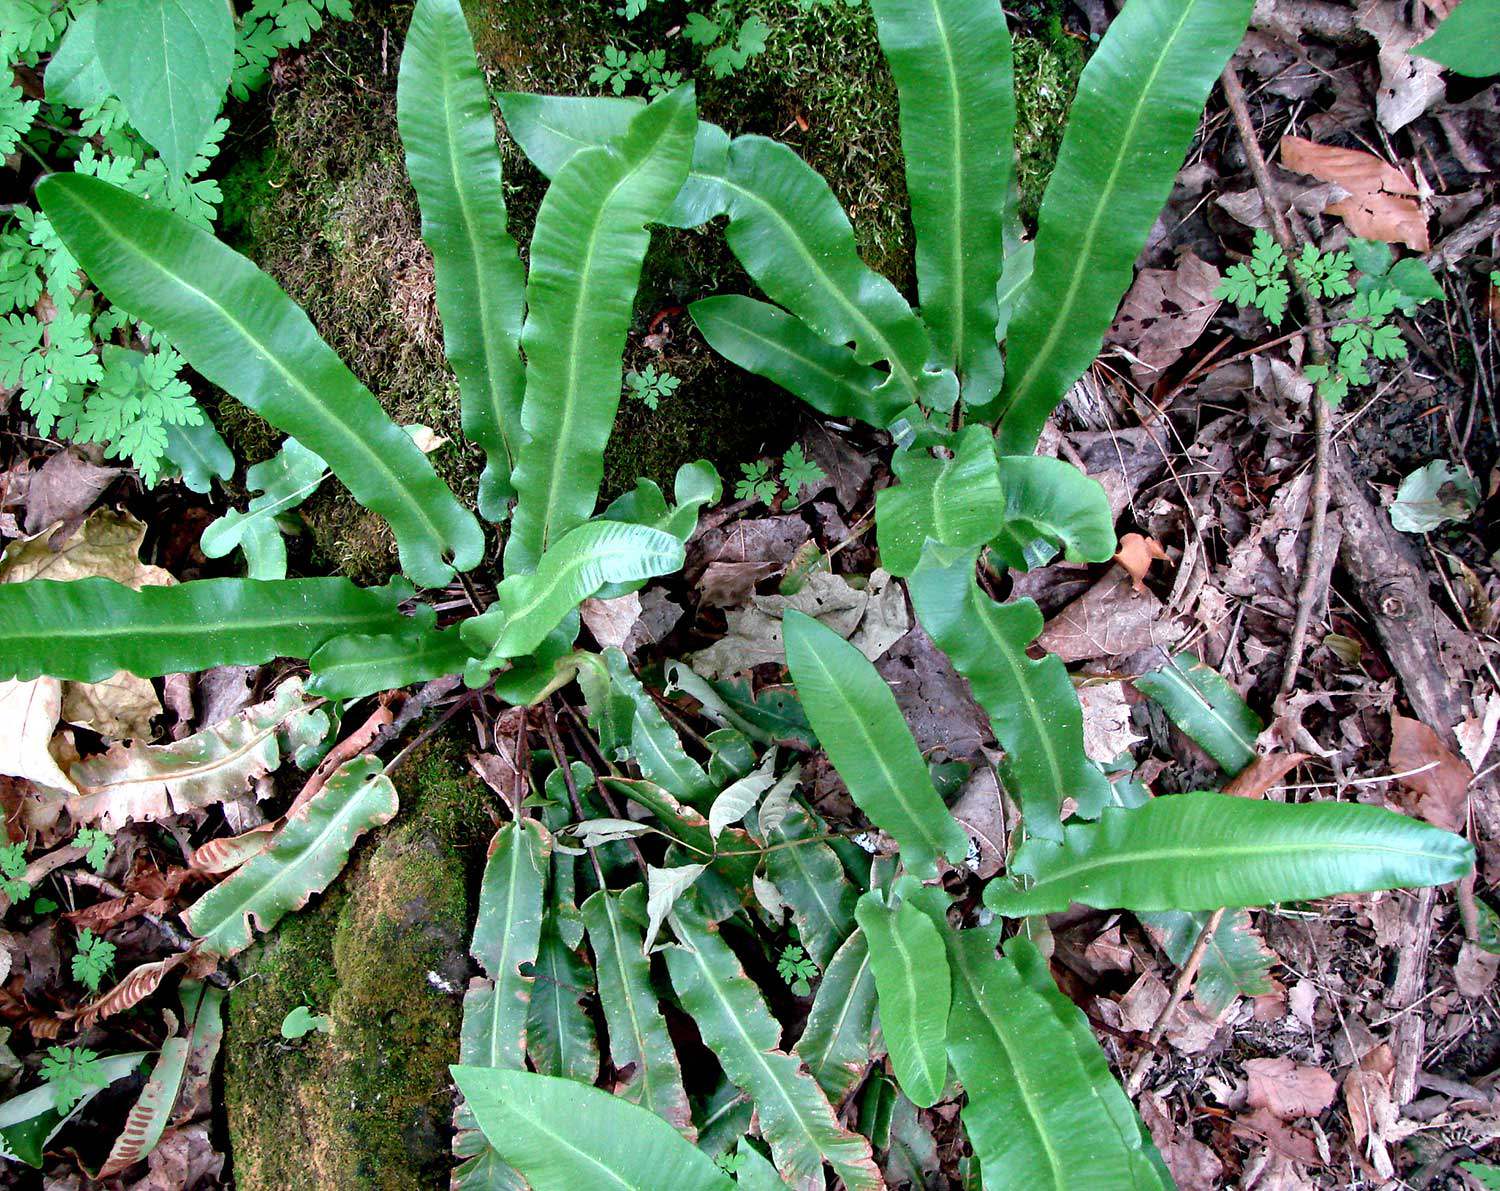 American hart’s tongue fern (Asplenium scolopendrium americanum) – special concern provincially and nationally